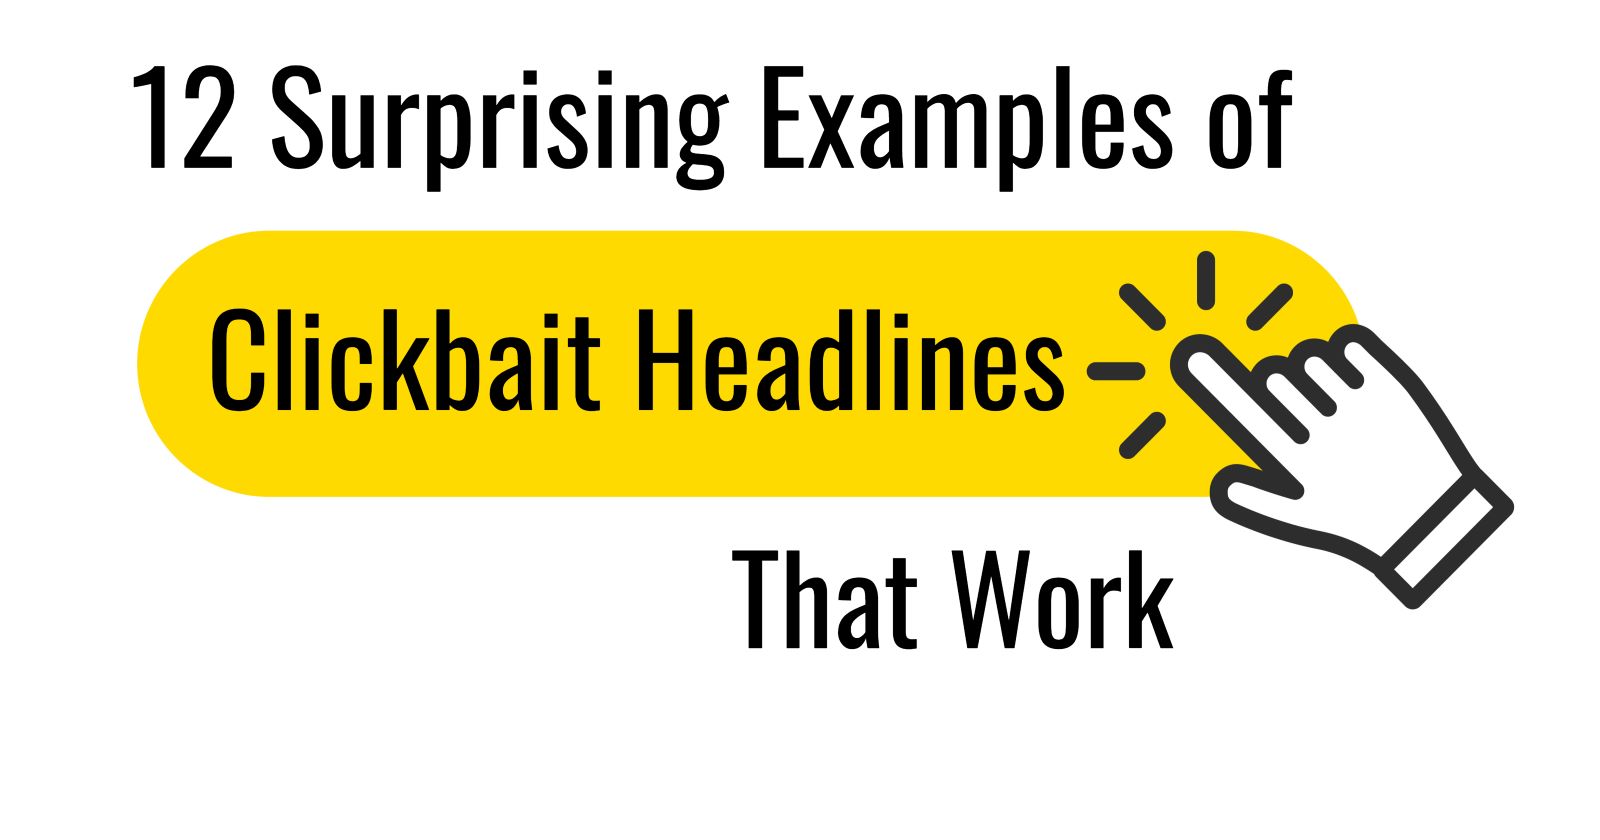 12 Surprising Examples of Clickbait Headlines That Work